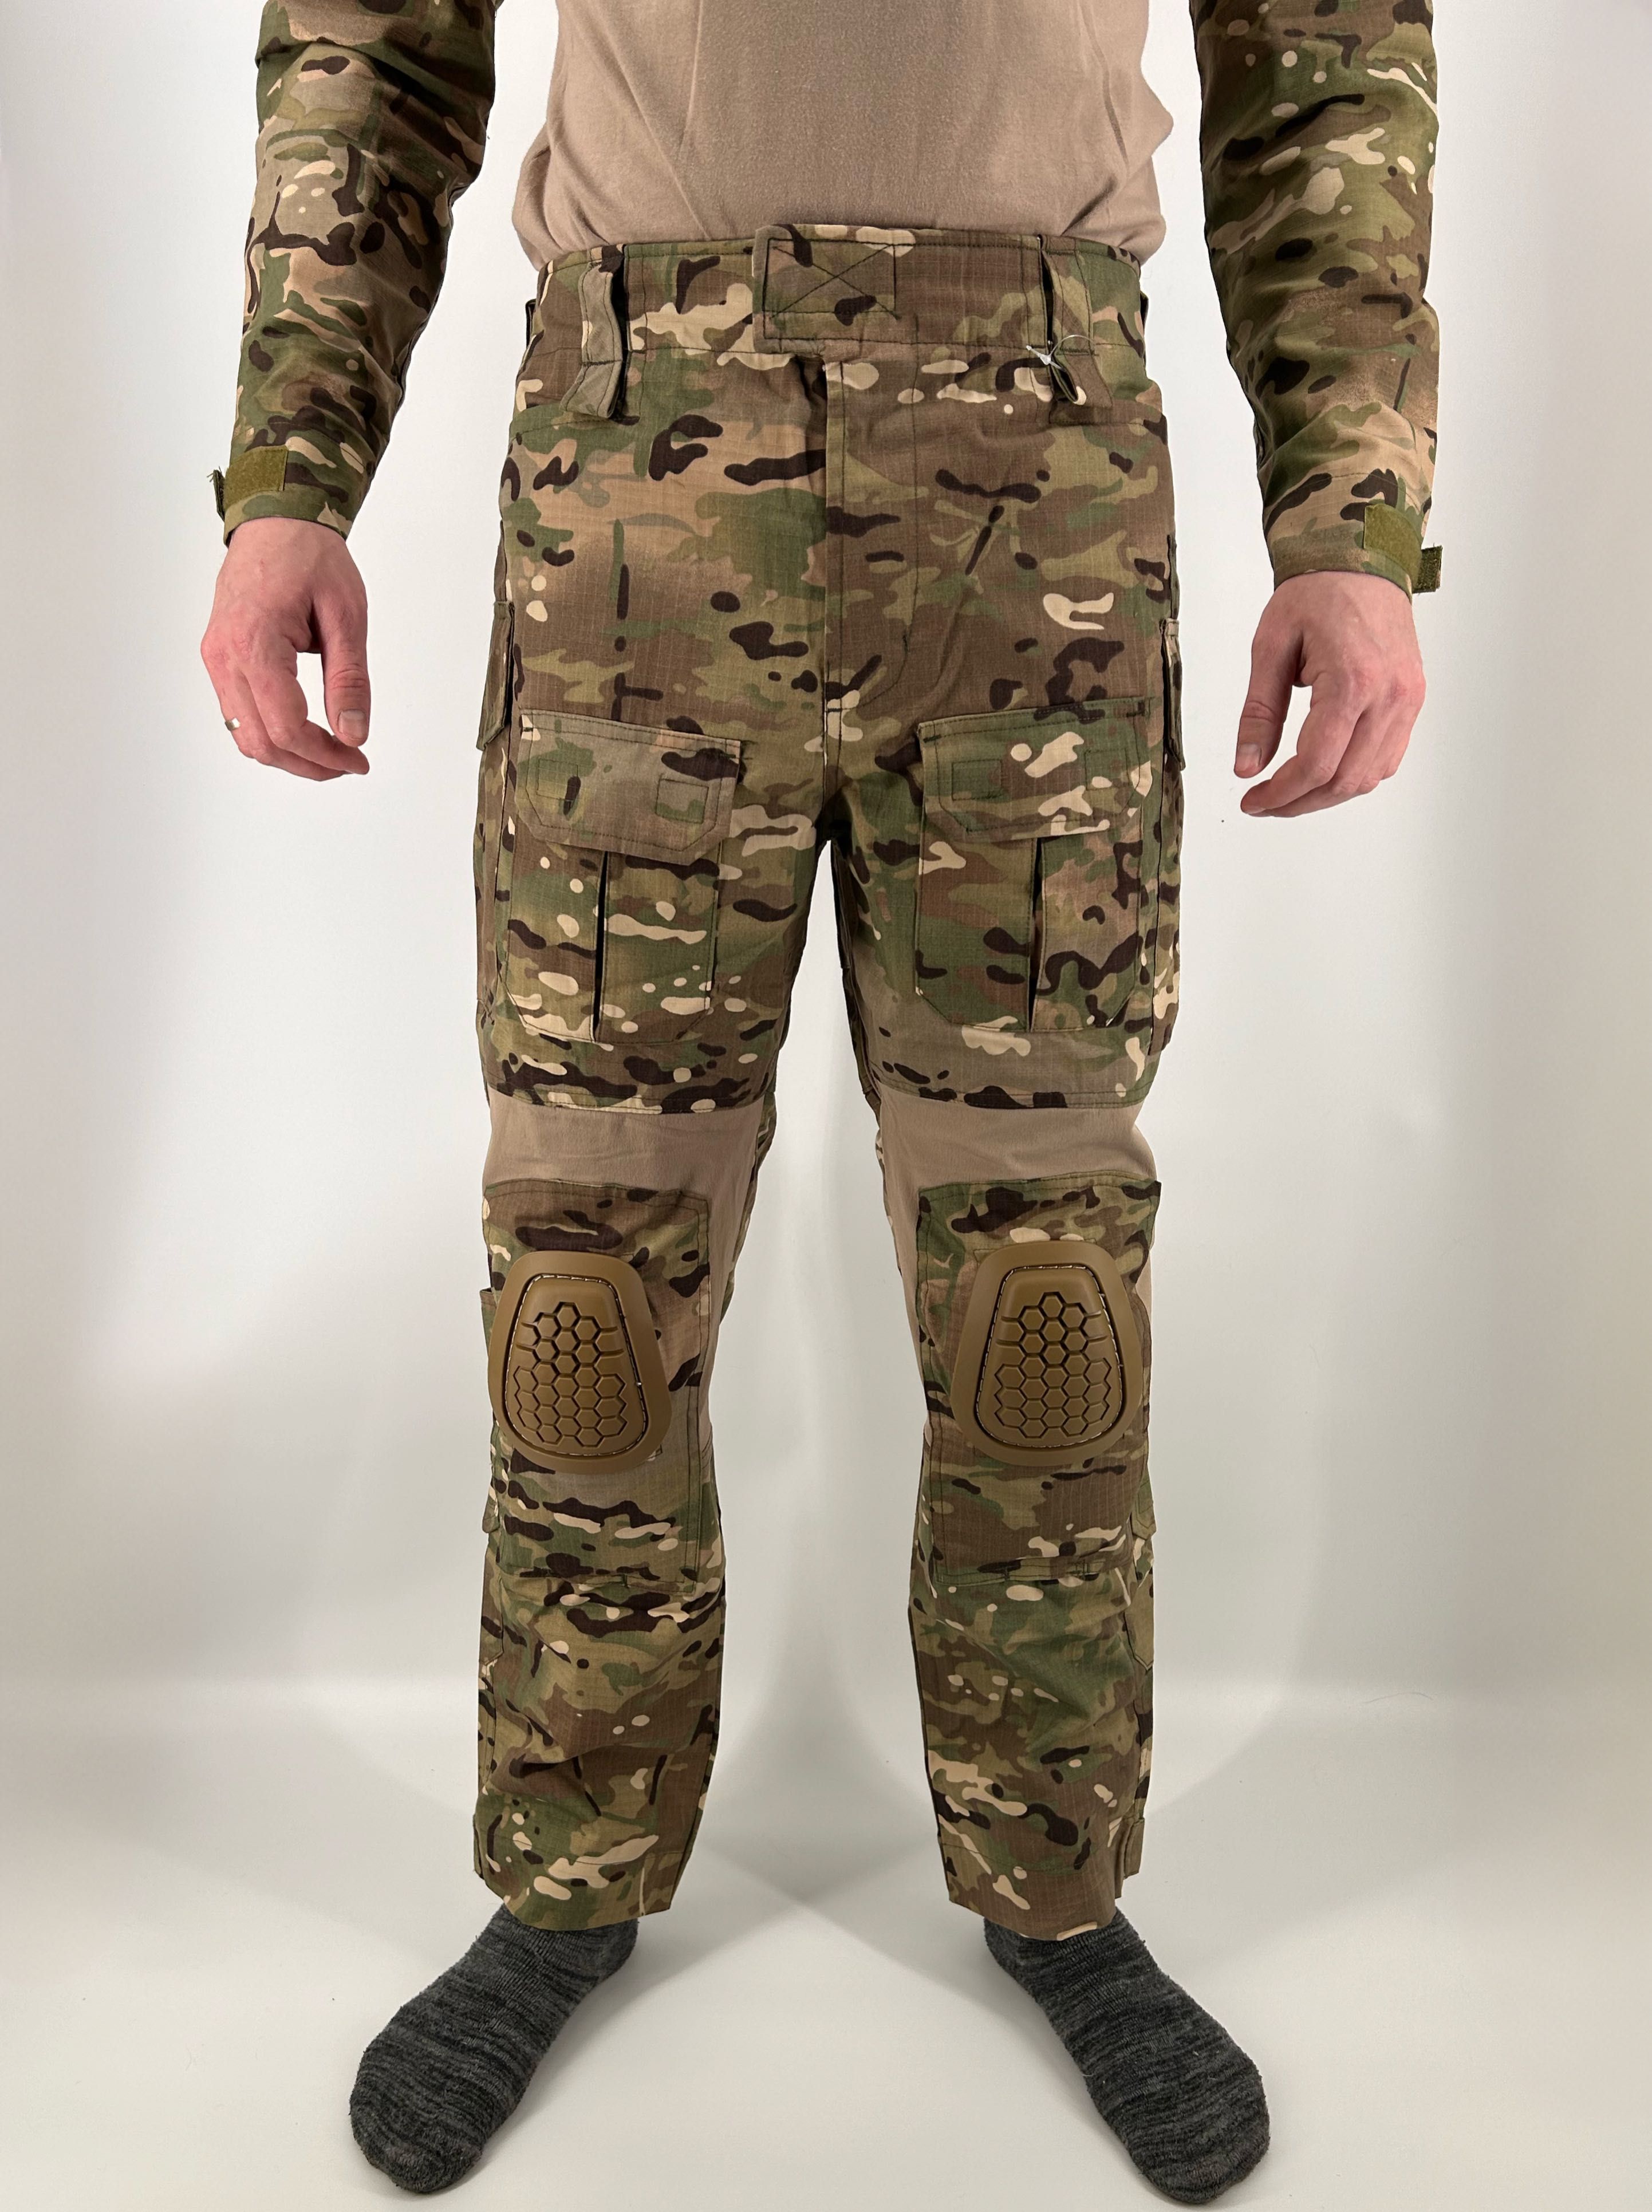 Військові тактичні штани G3 з наколінниками мультикам multicam штаны